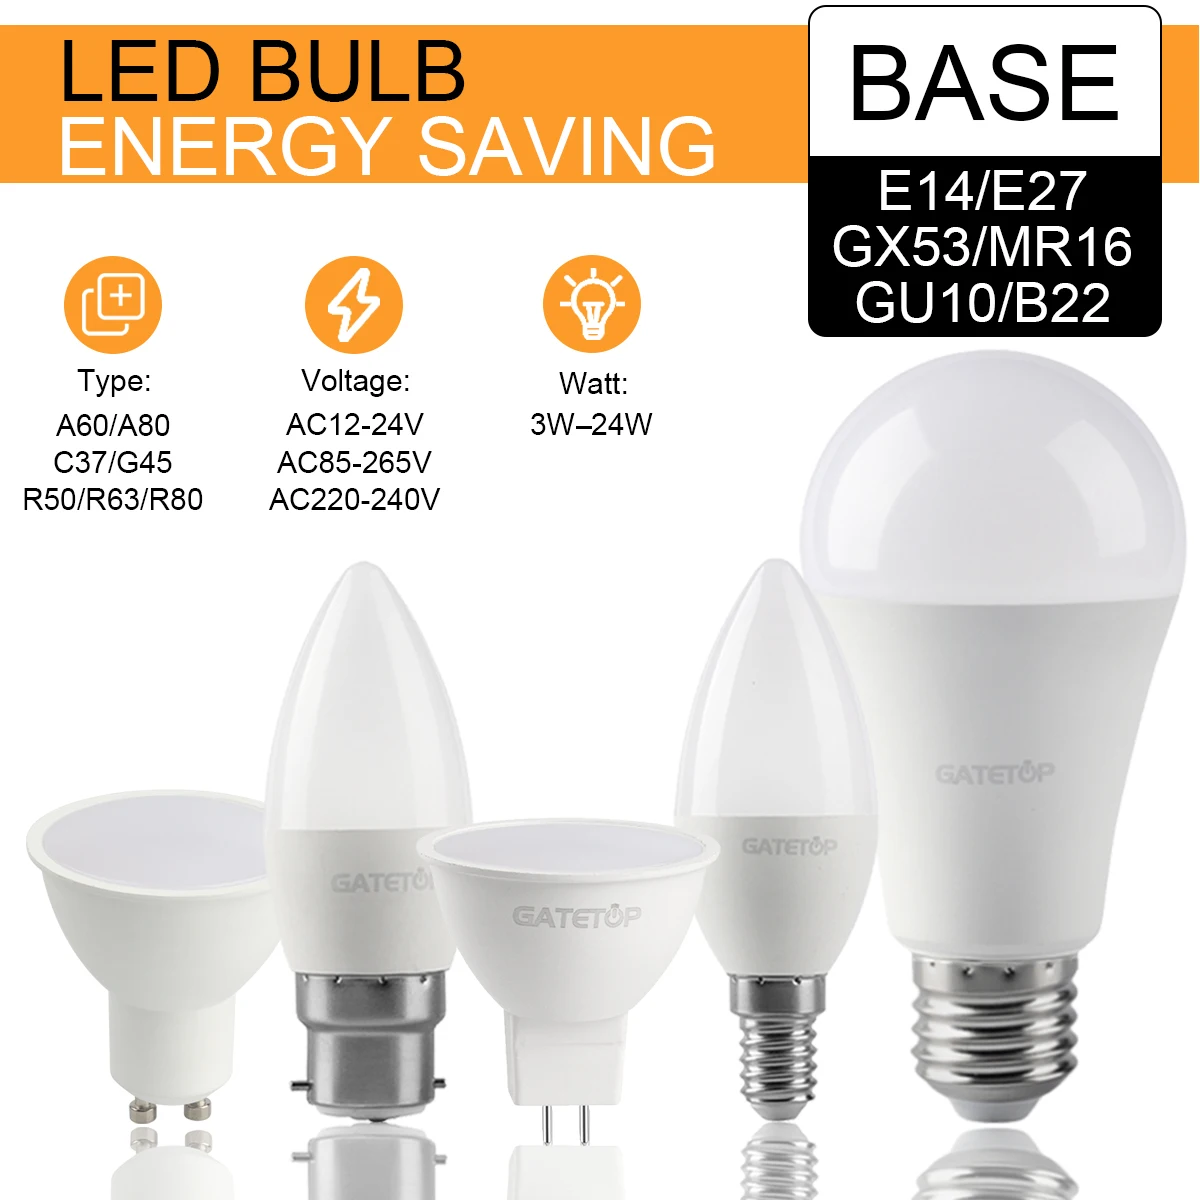 

LED Energy Saving Light AC220-240V 7W 9W 15W 24W Bulbs Spotlight MR16 GX53 GU10 Cold Warm White Light for Interior Room